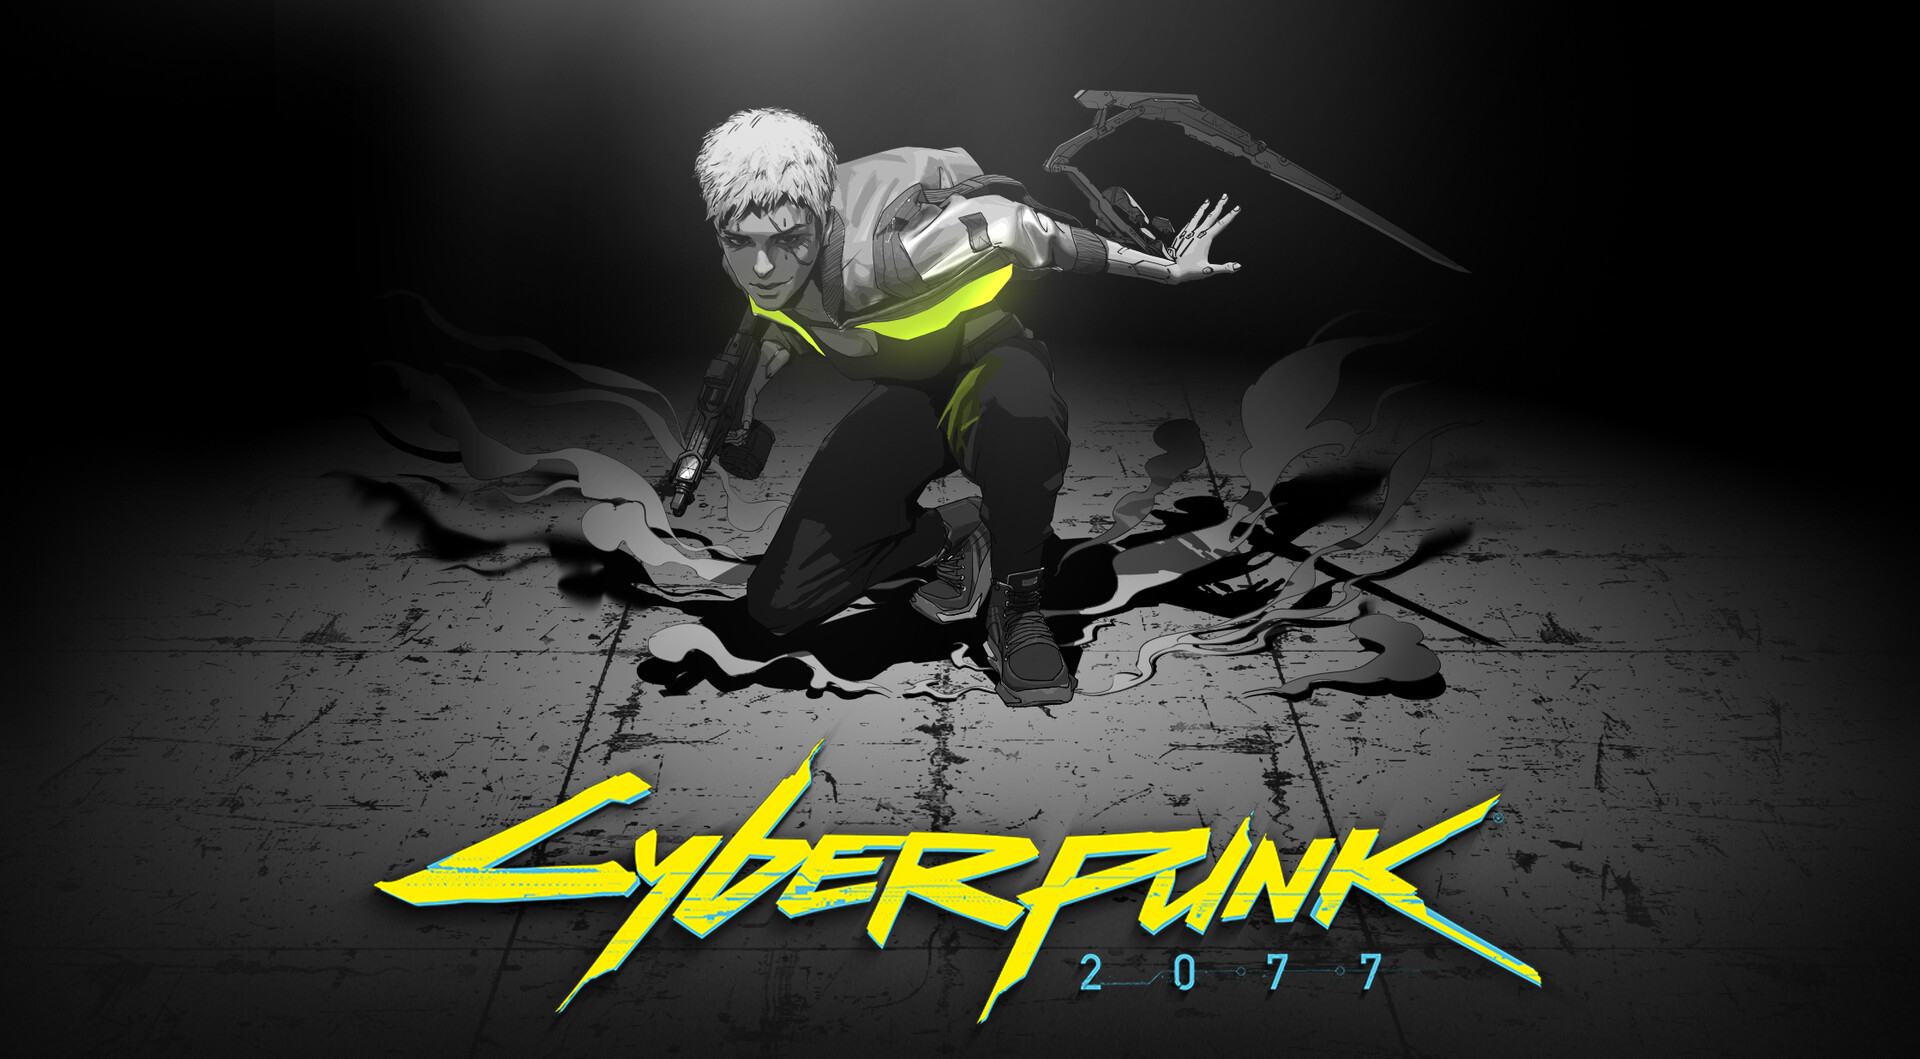 Download wallpaper: Cyberpunk 2077 2 1440x900